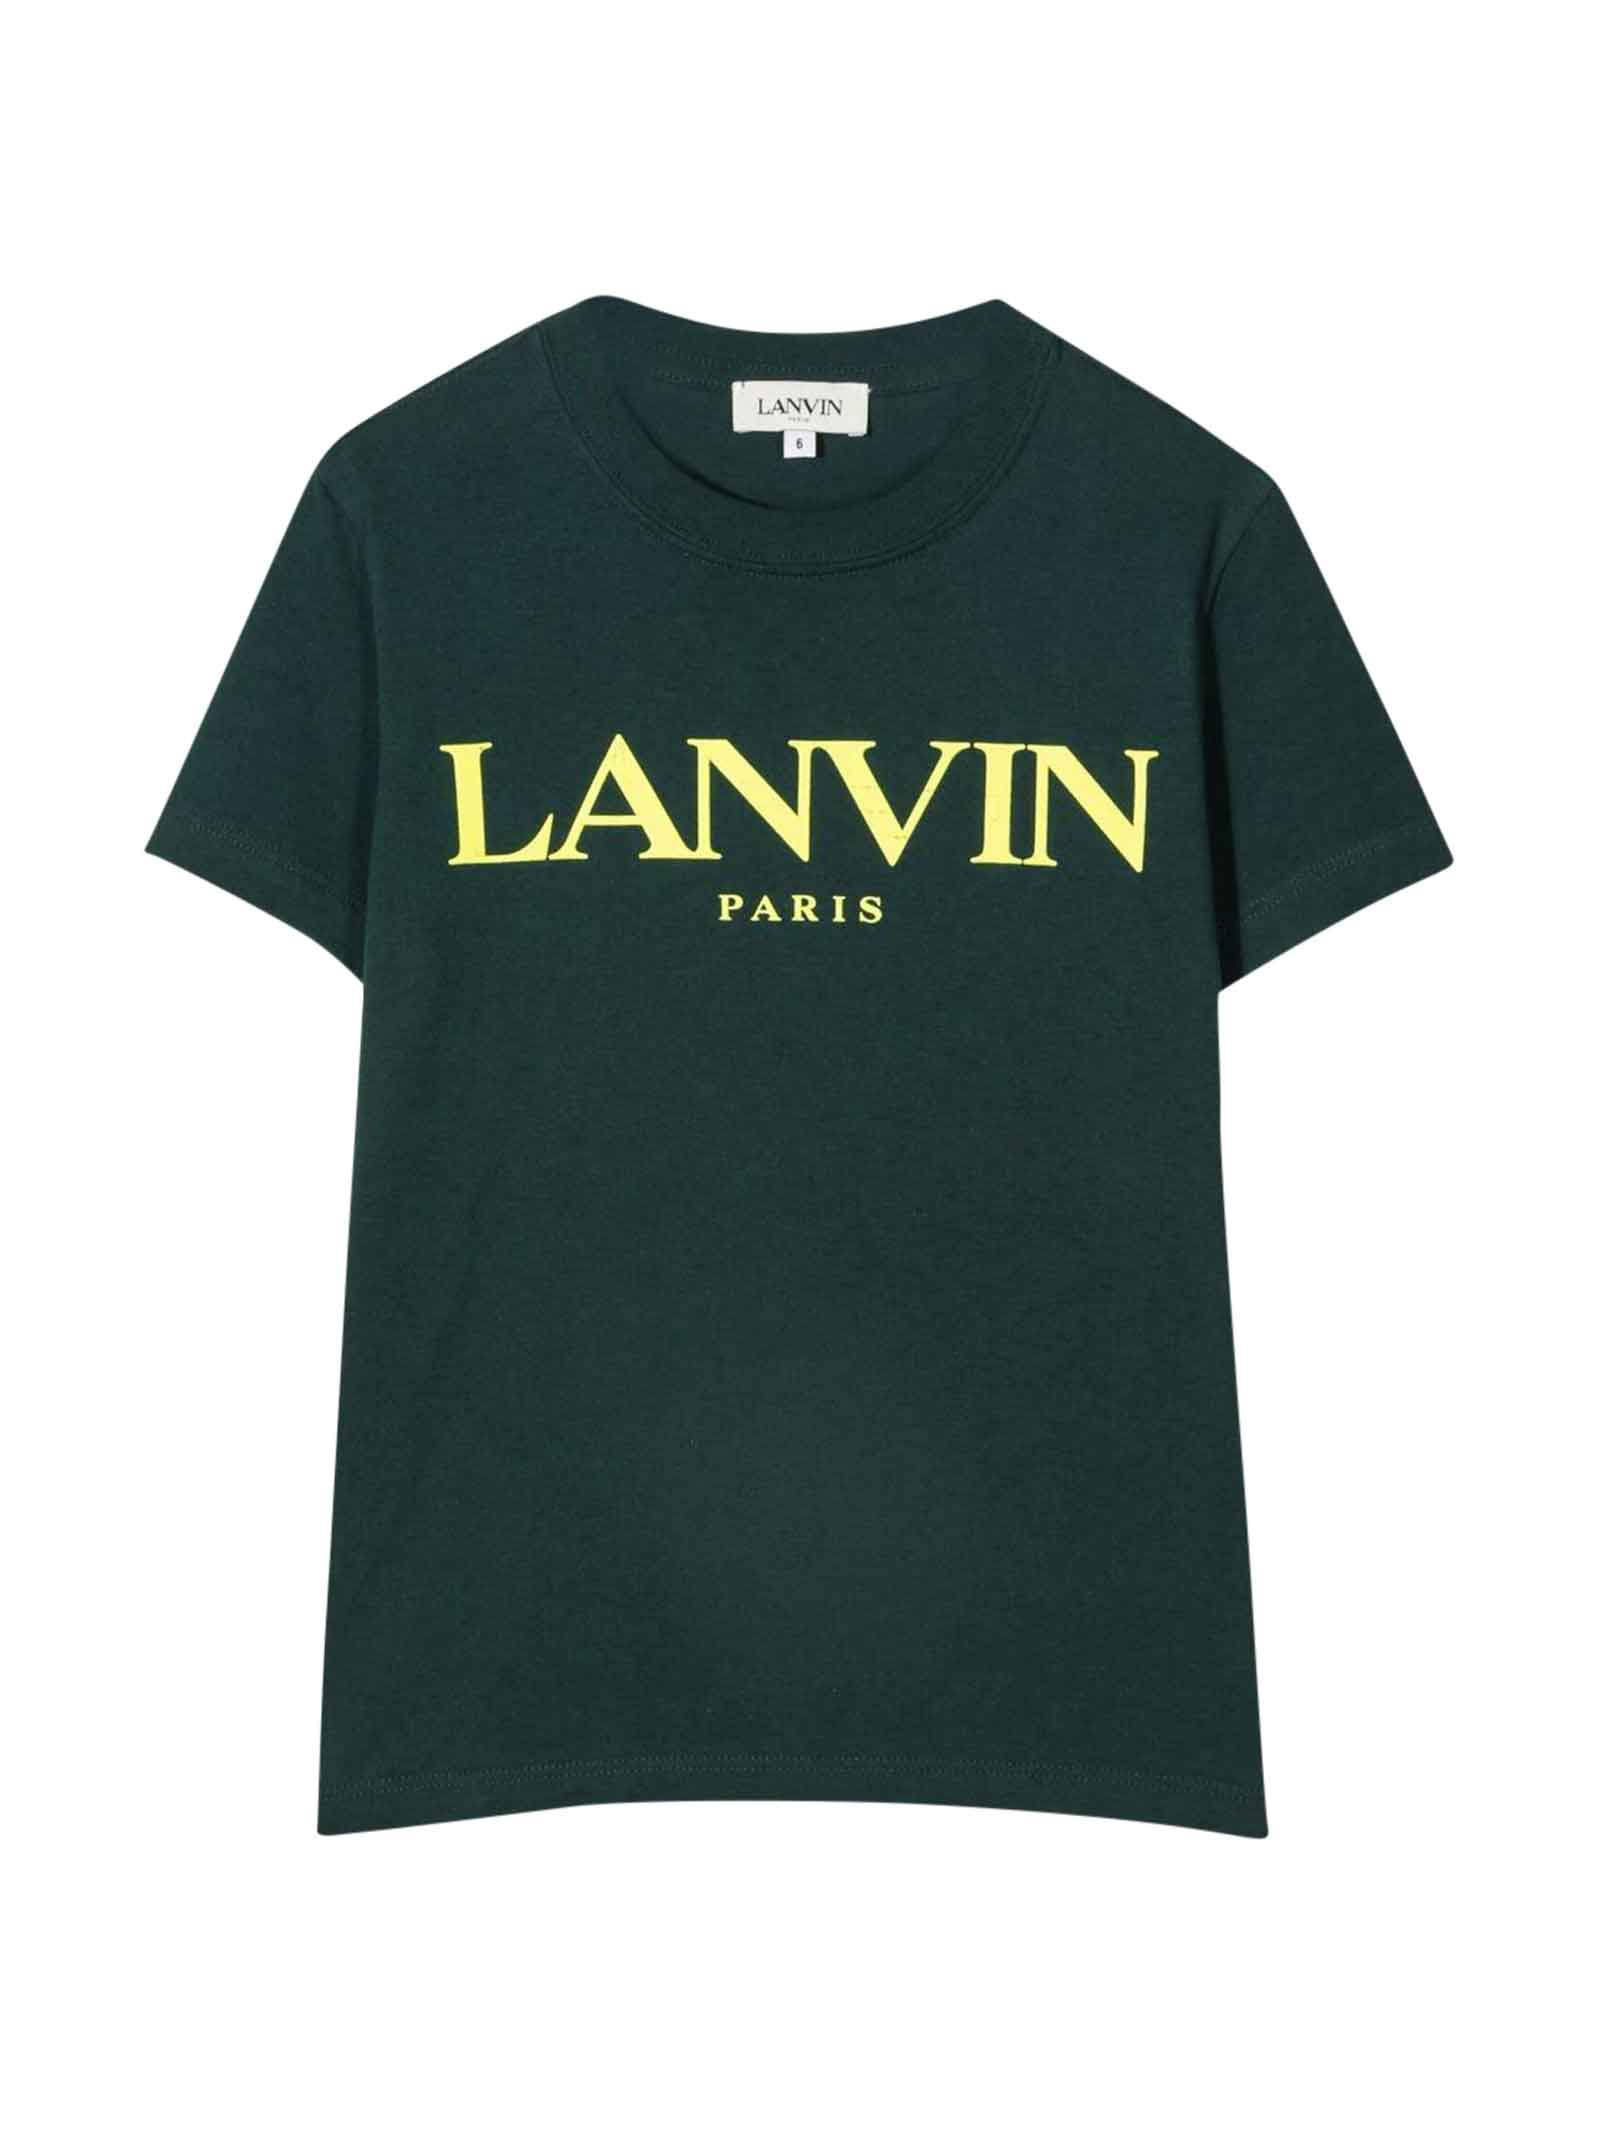 Lanvin Unisex Dark Green T-shirt